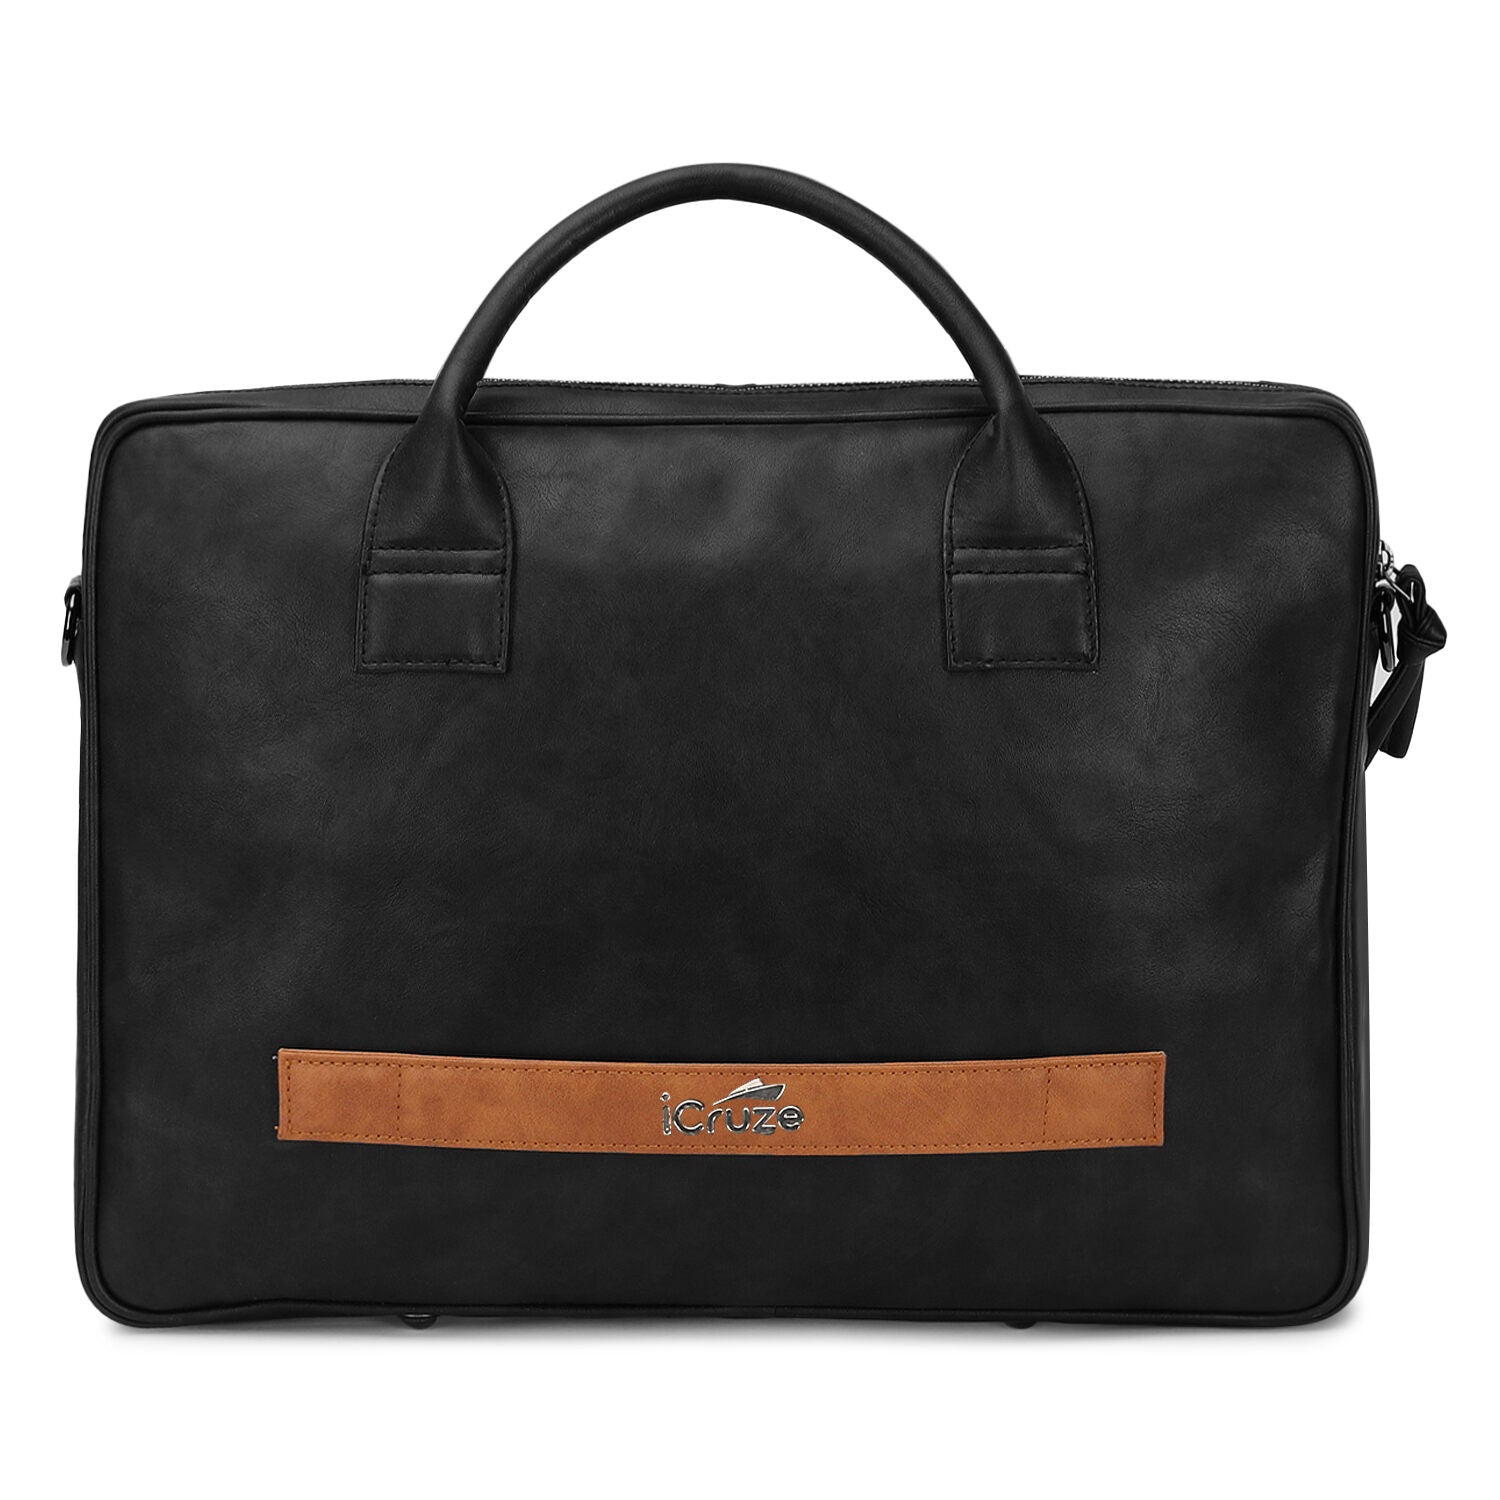 iCruze Elite Slim 15 inch Messenger Bag Black - iCruze